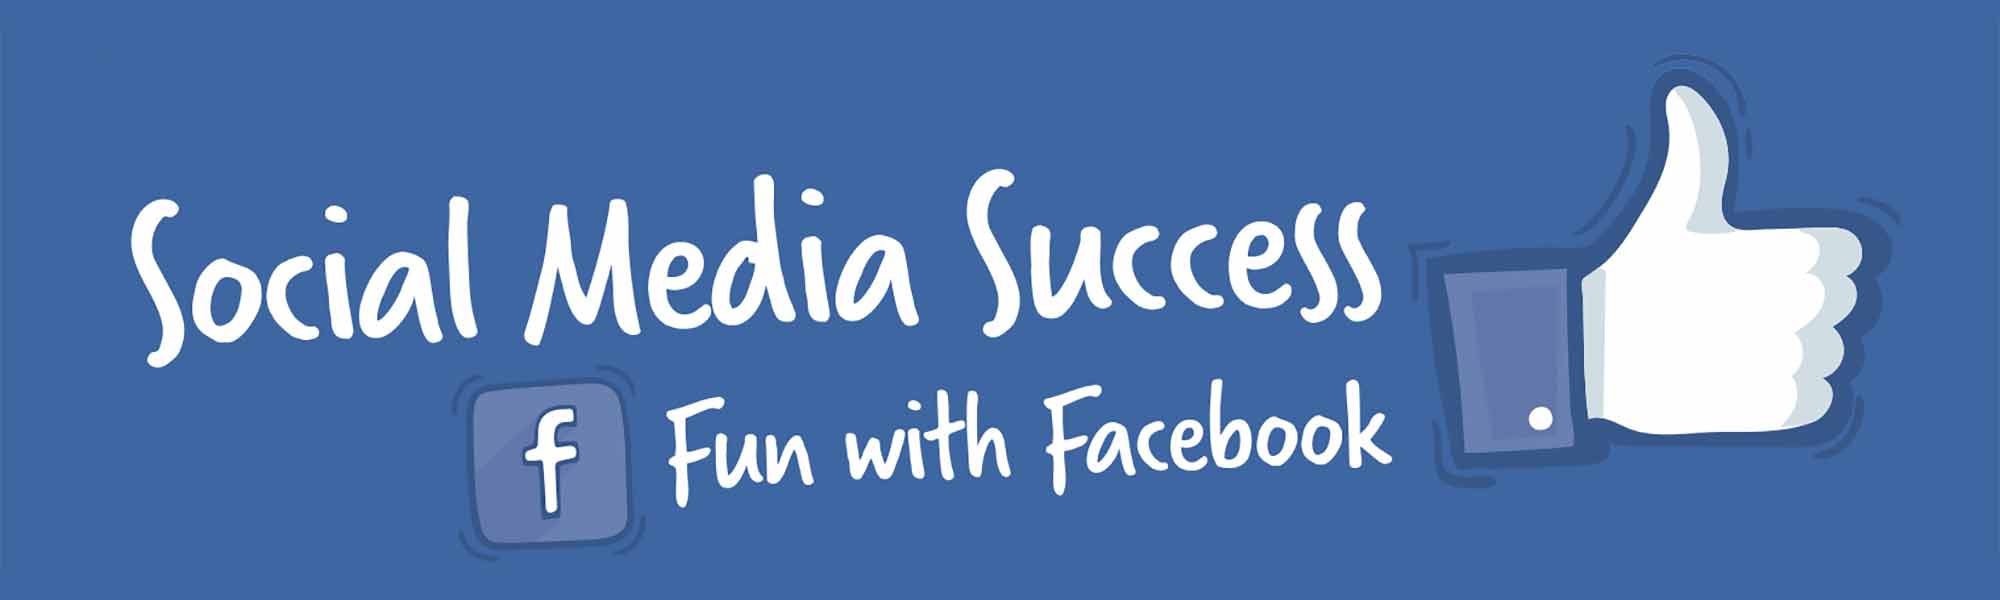 Social-Media-Success-Fun-with-Facebook-magazine-Welcome-Home-banner-hero